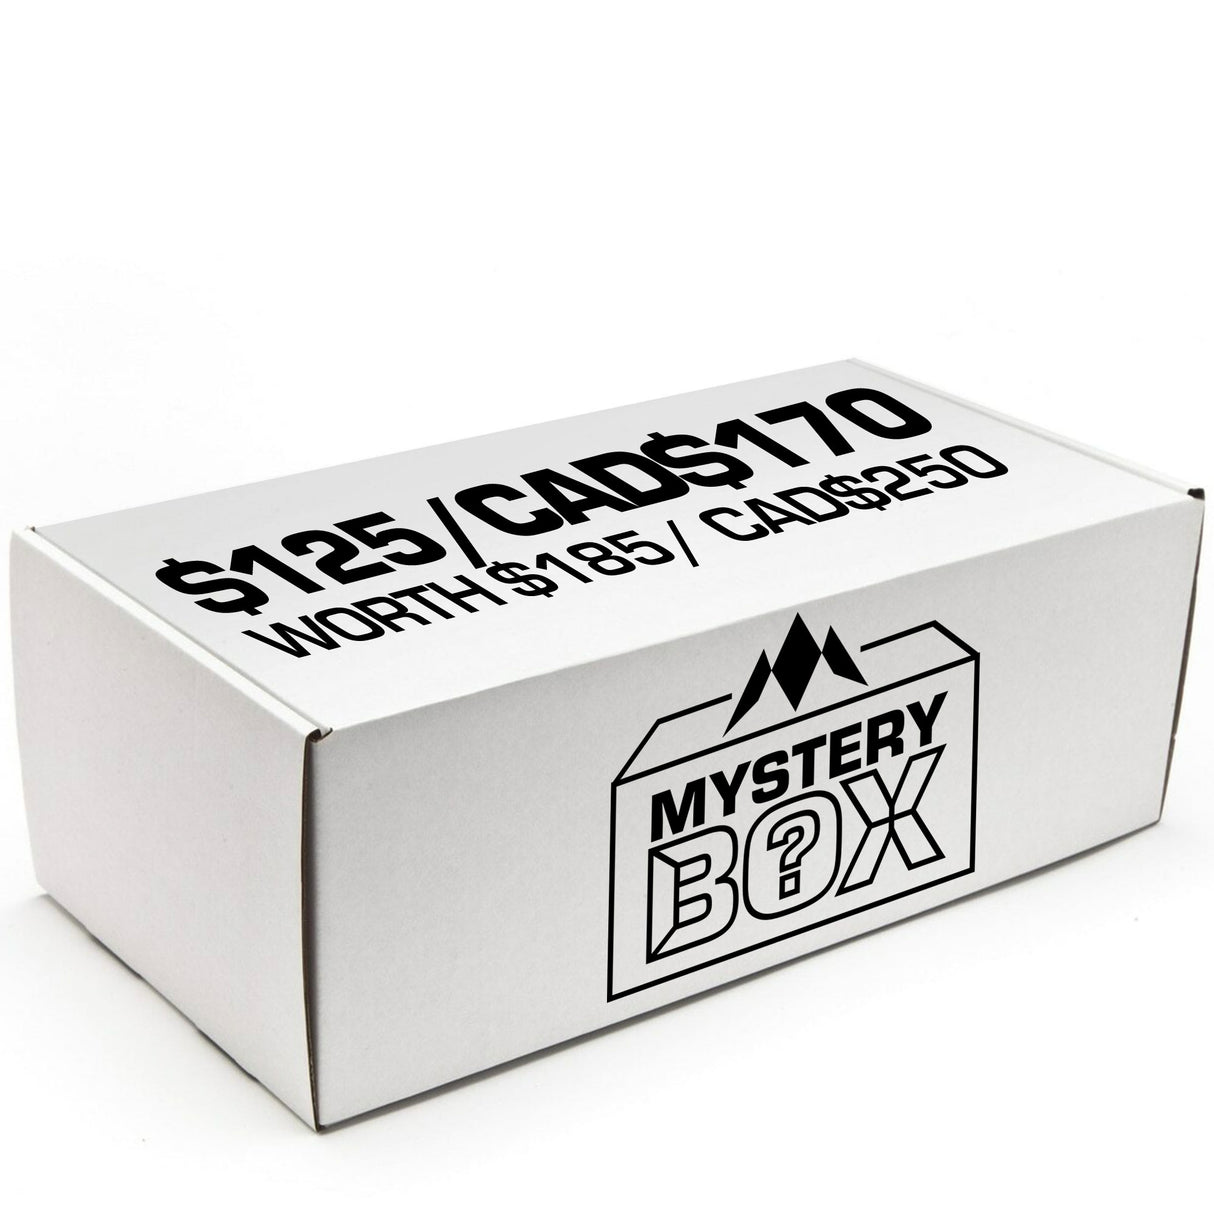 Mission Mystery Box - Darts & Accessories - Worth $185 (CAD$250)